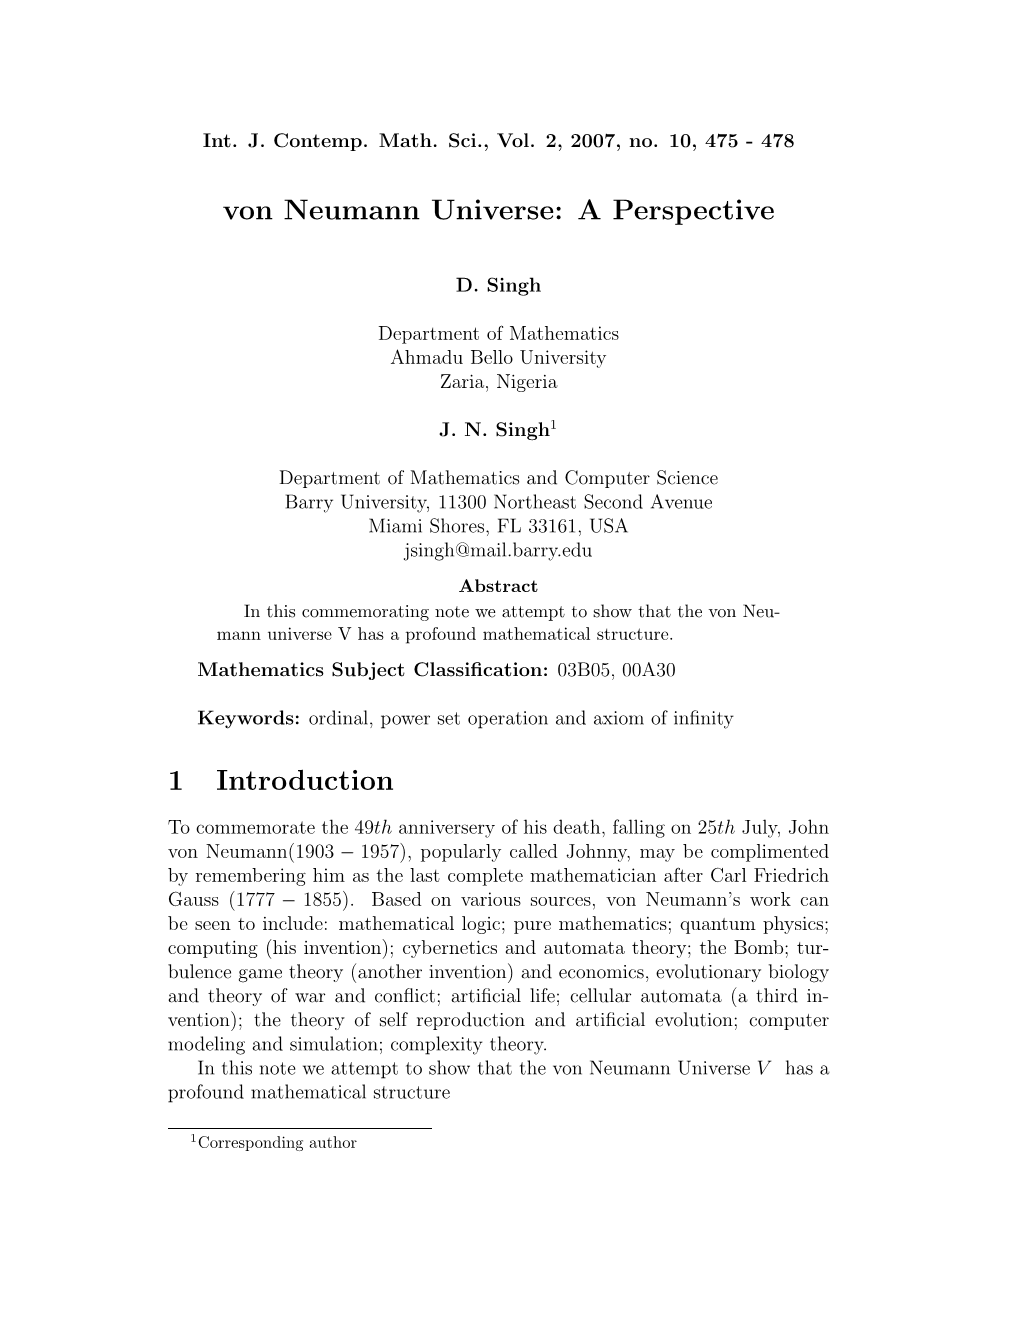 Von Neumann Universe: a Perspective 1 Introduction